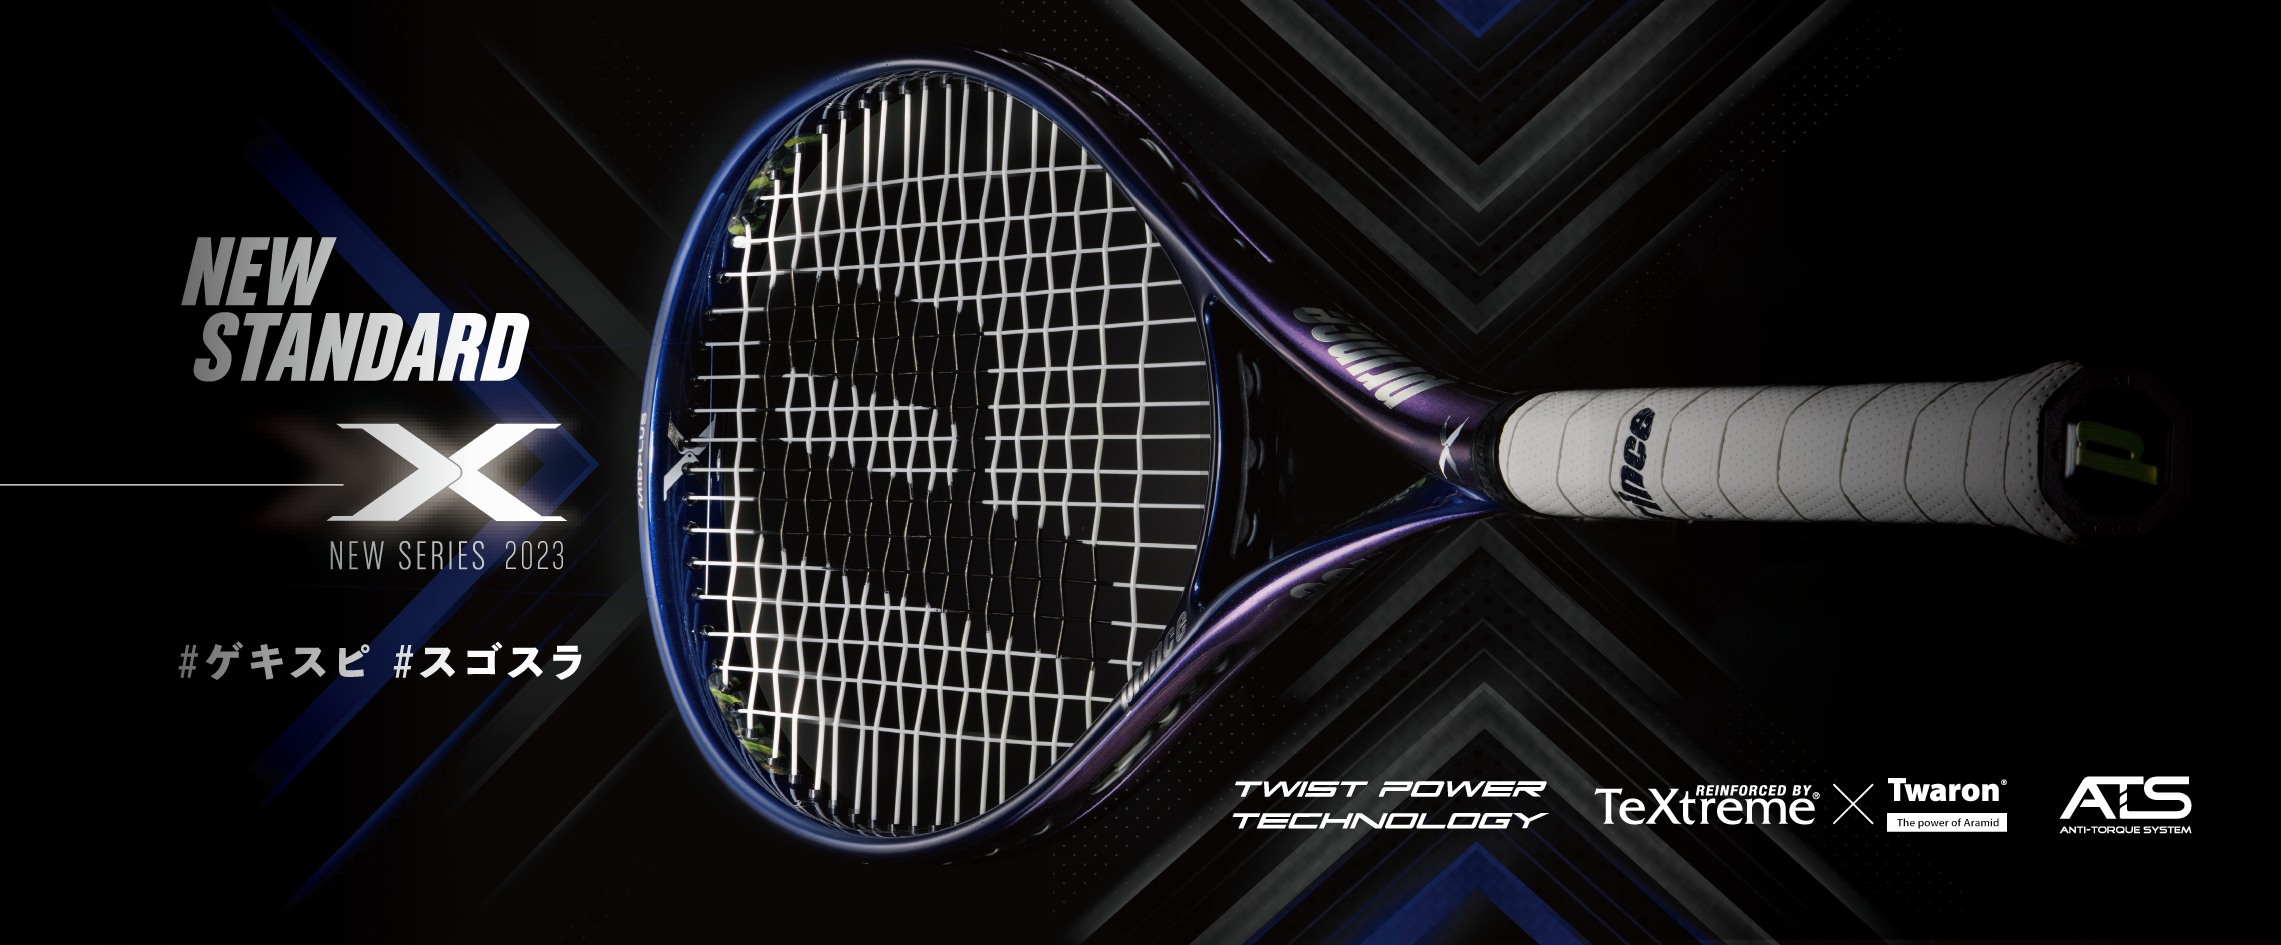 X Series 2023 - Prince プリンステニス公式サイト